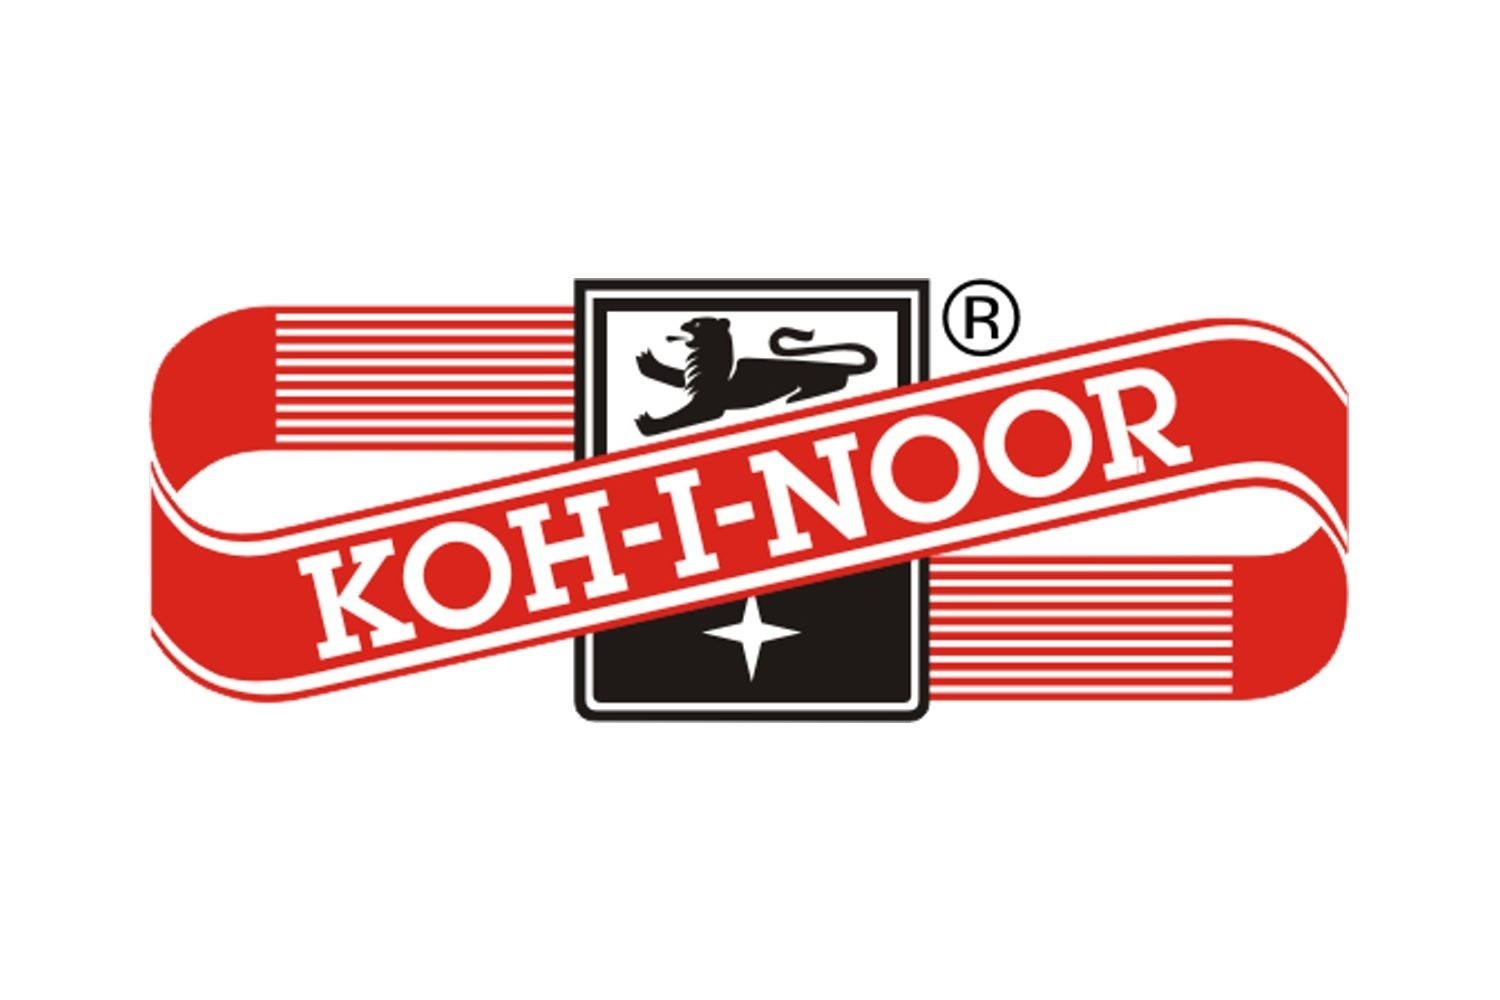 Koh-I-noor